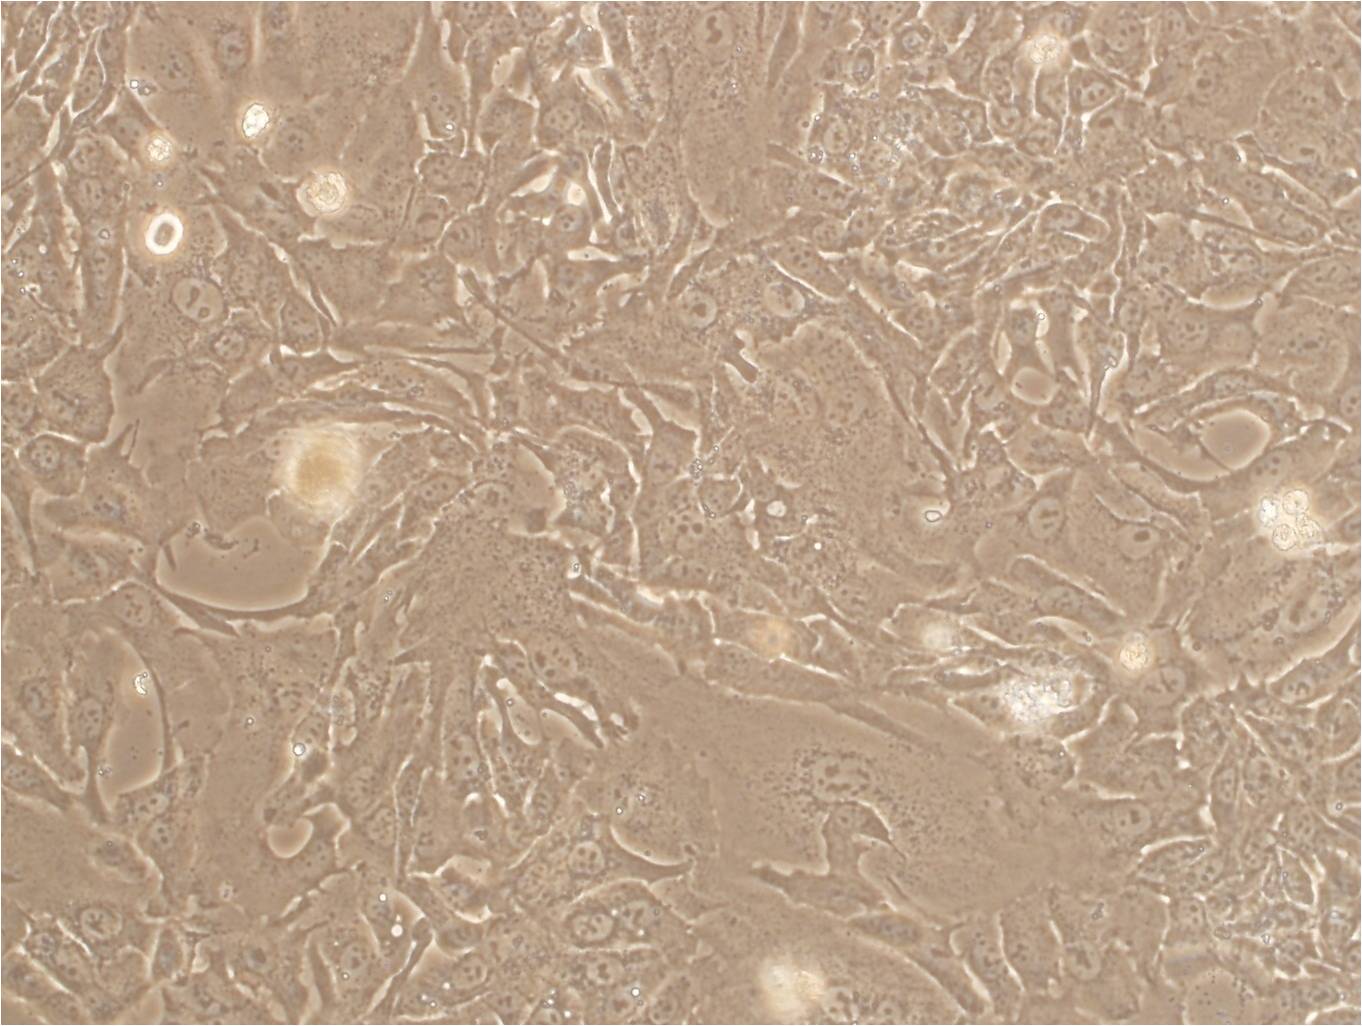 YES-2：人食管鳞癌传代细胞